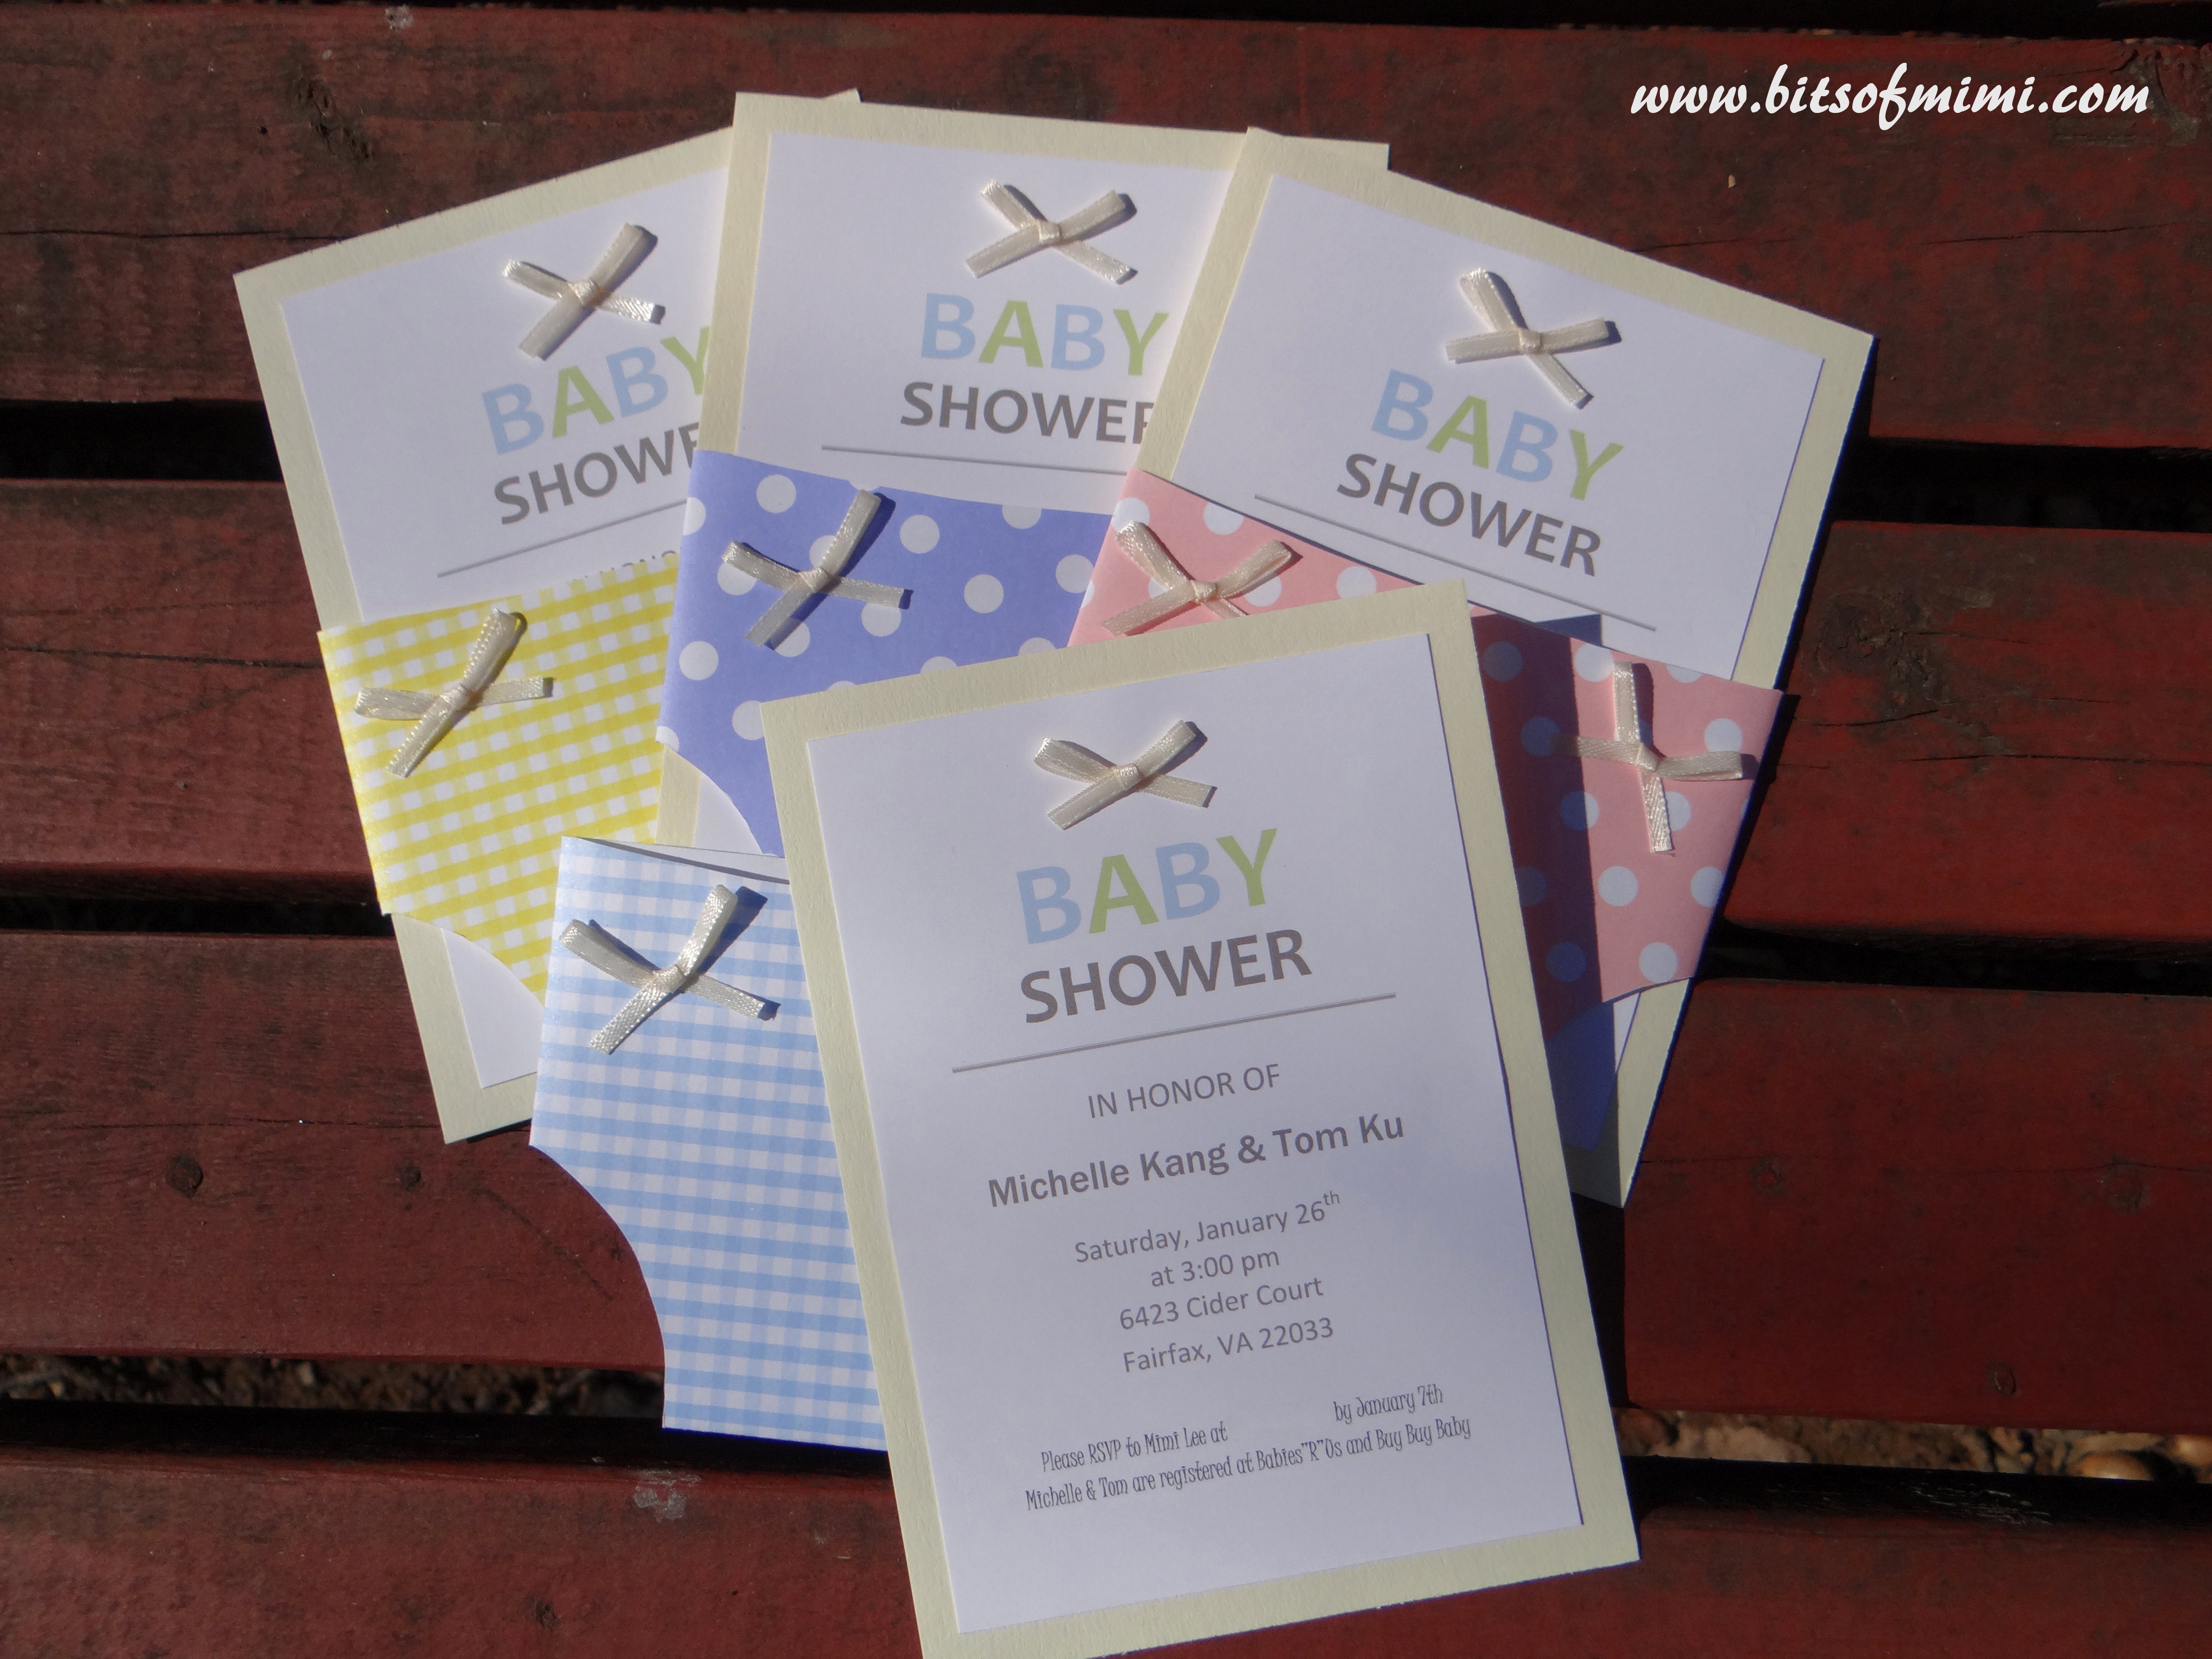 Baby Shower Invitations Make Baby Shower Invitations for